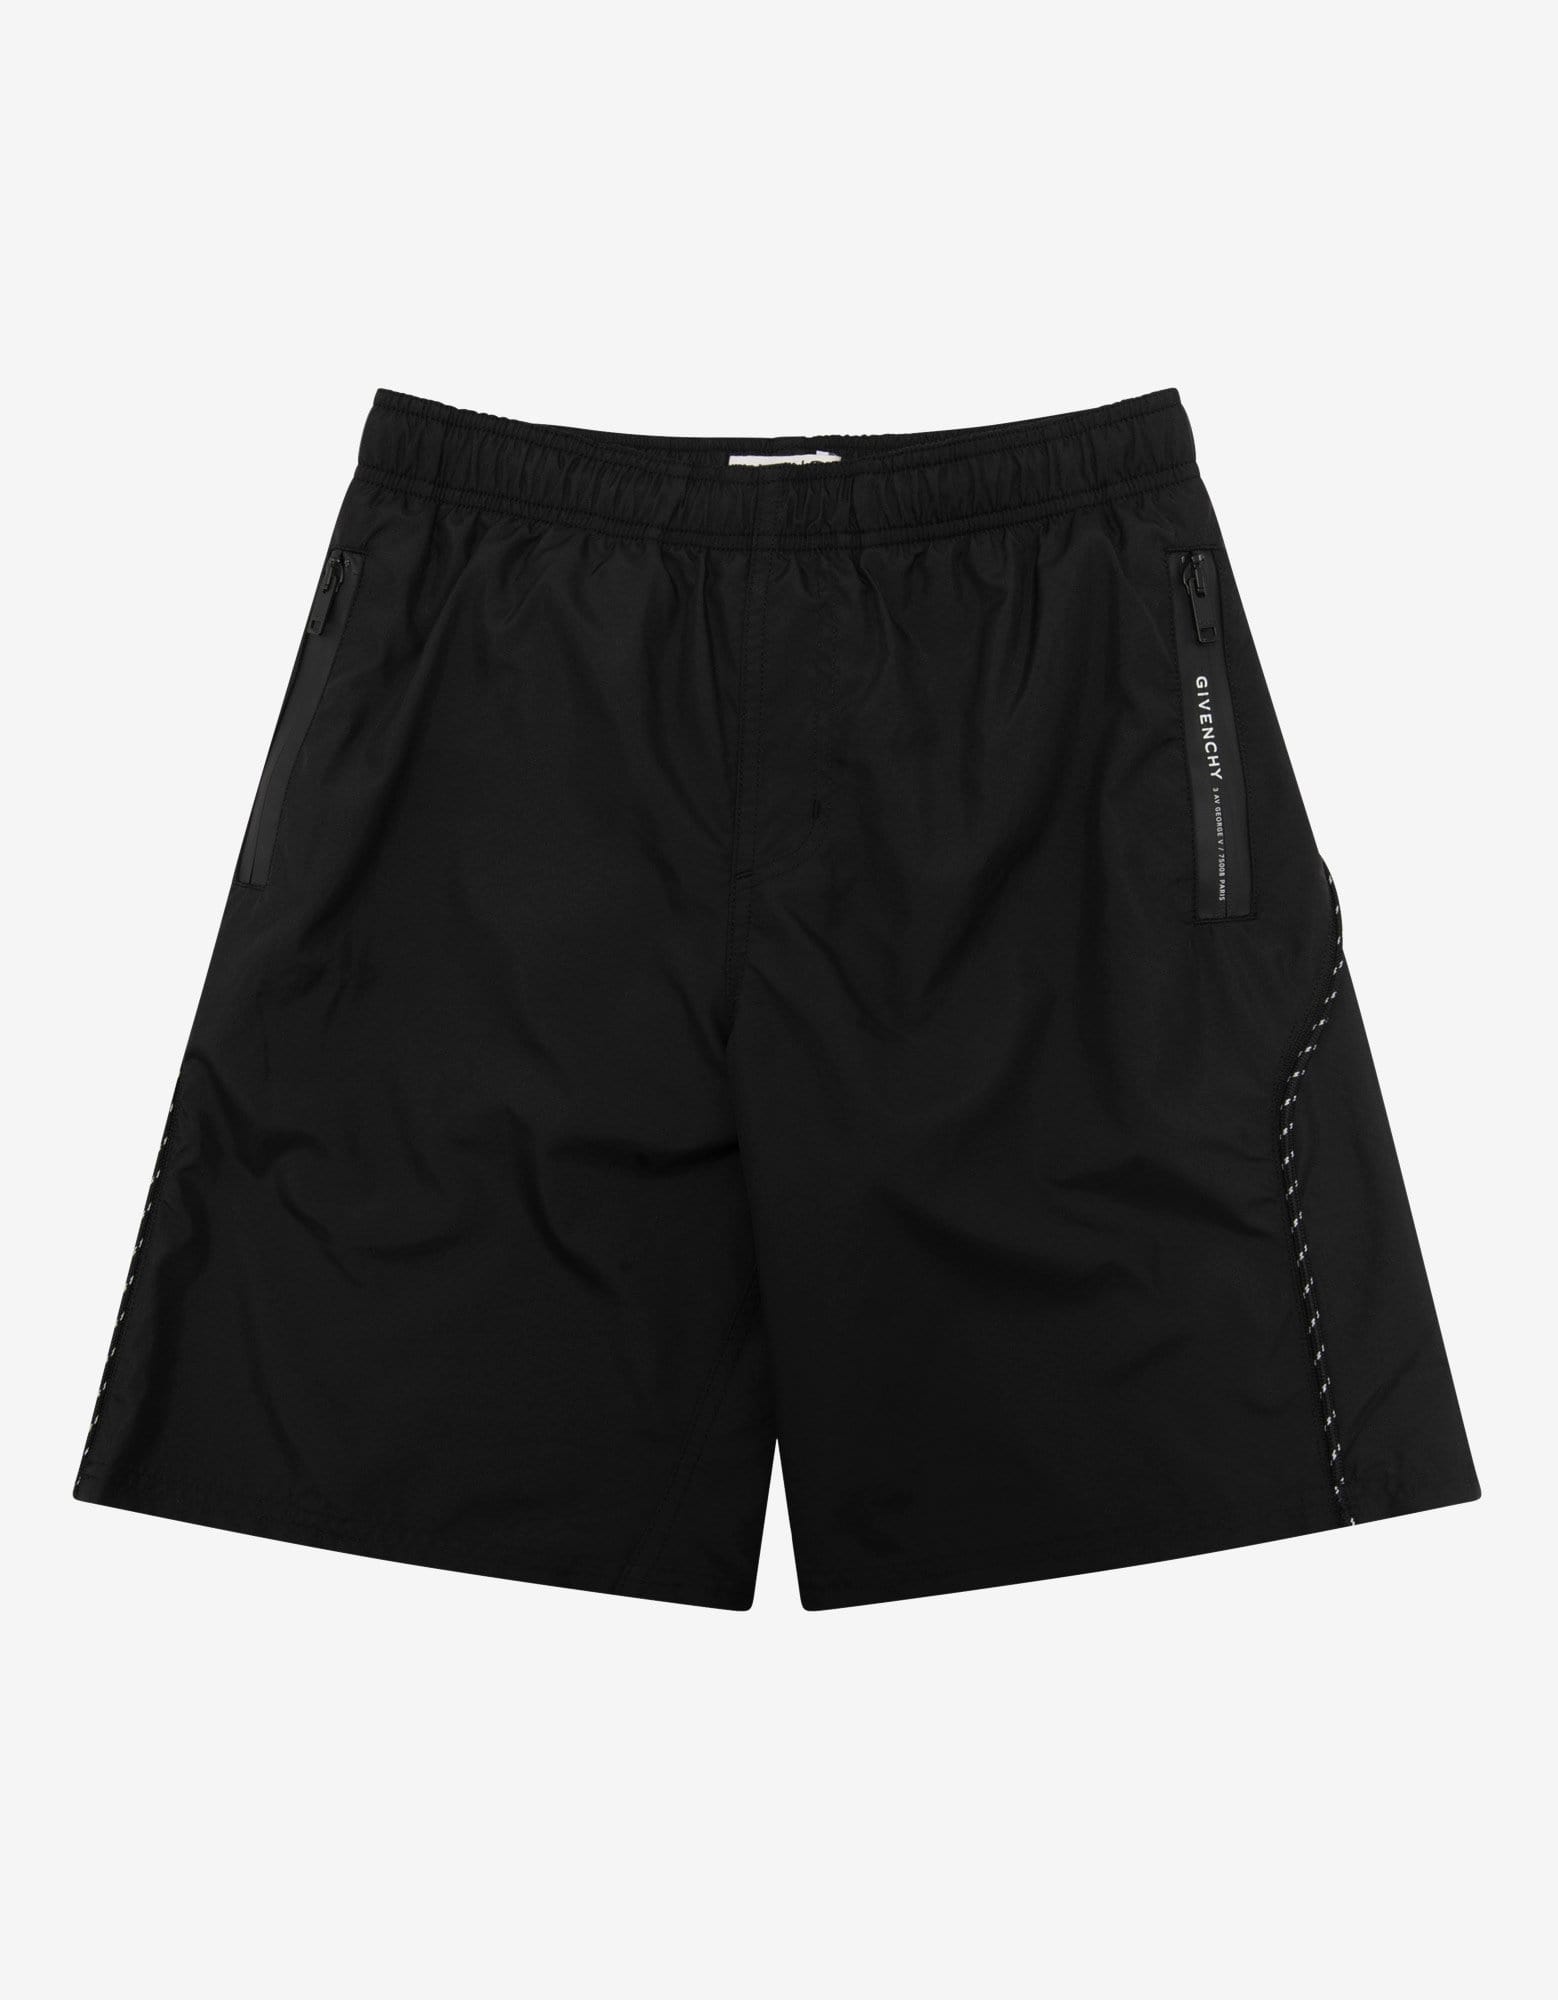 Black Lace Detail Swim Shorts - 1